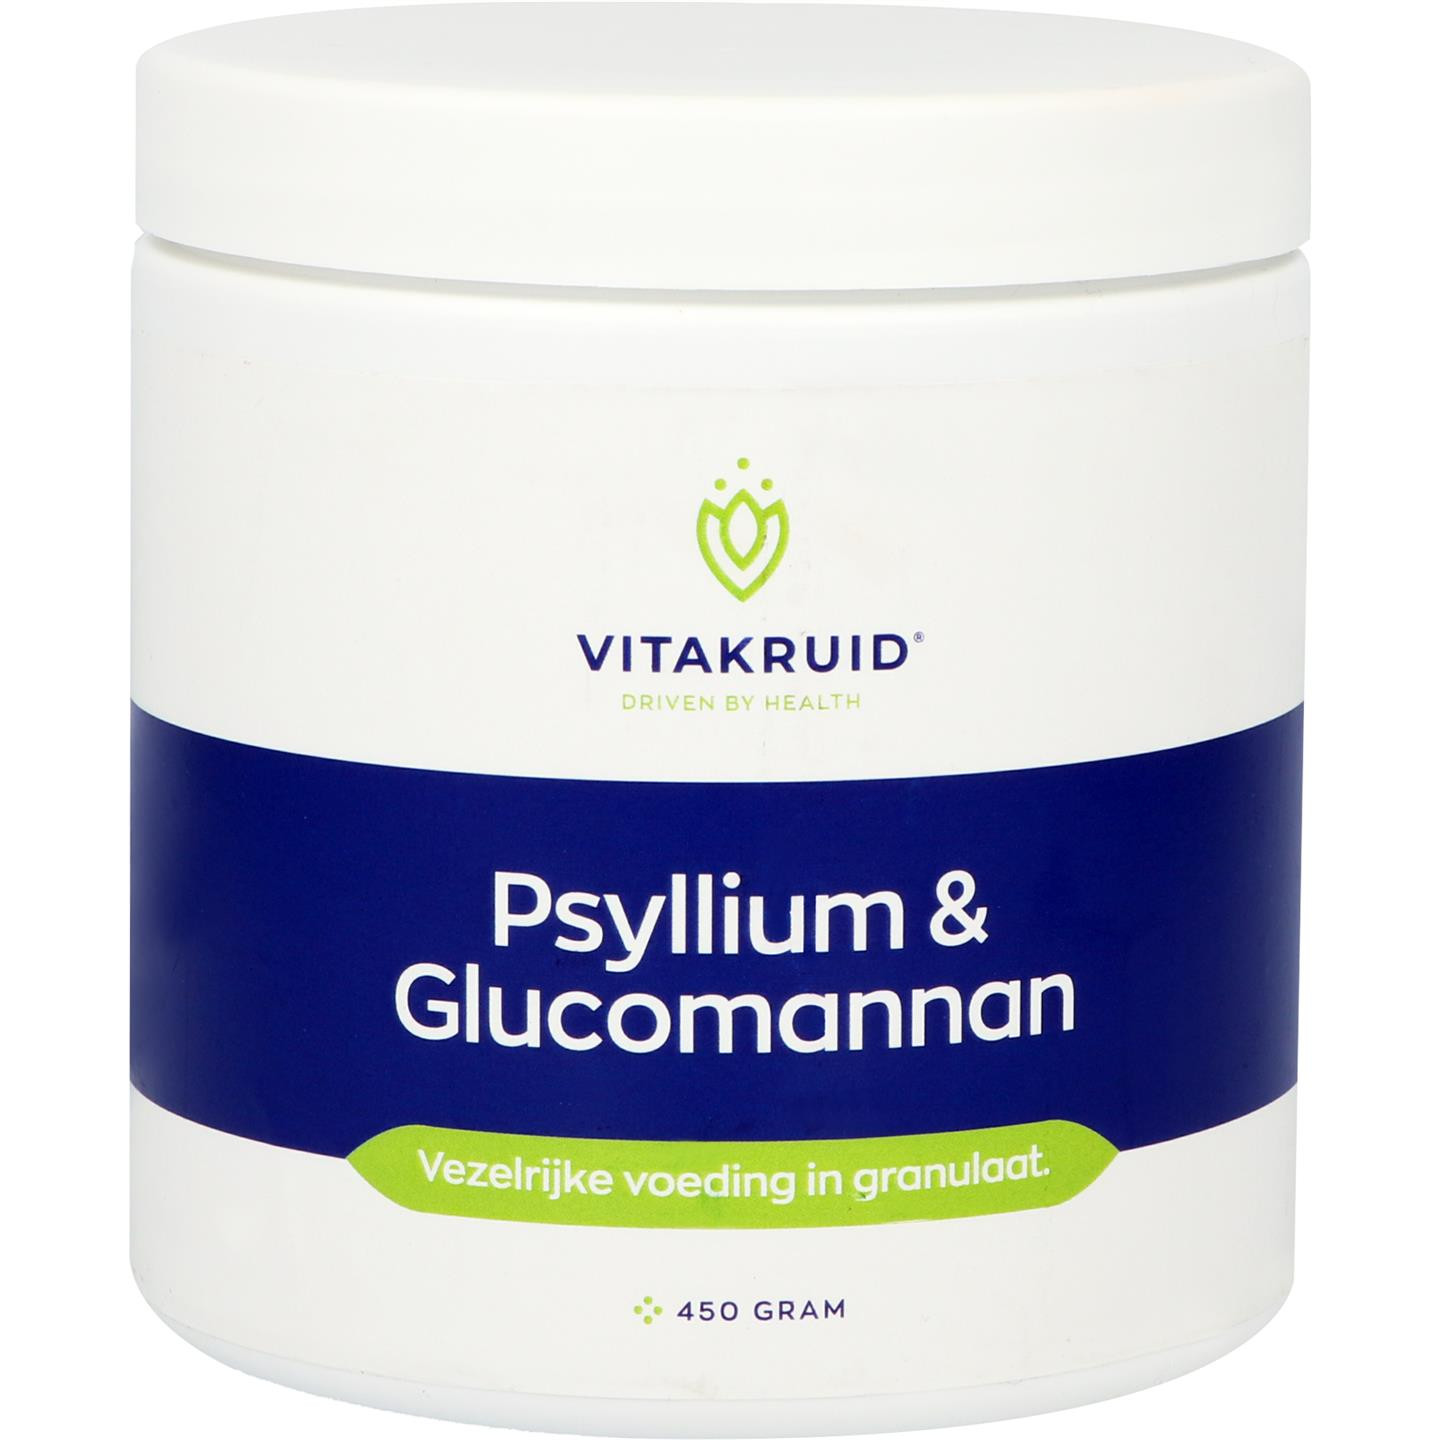 Psyllium & Glucomannan